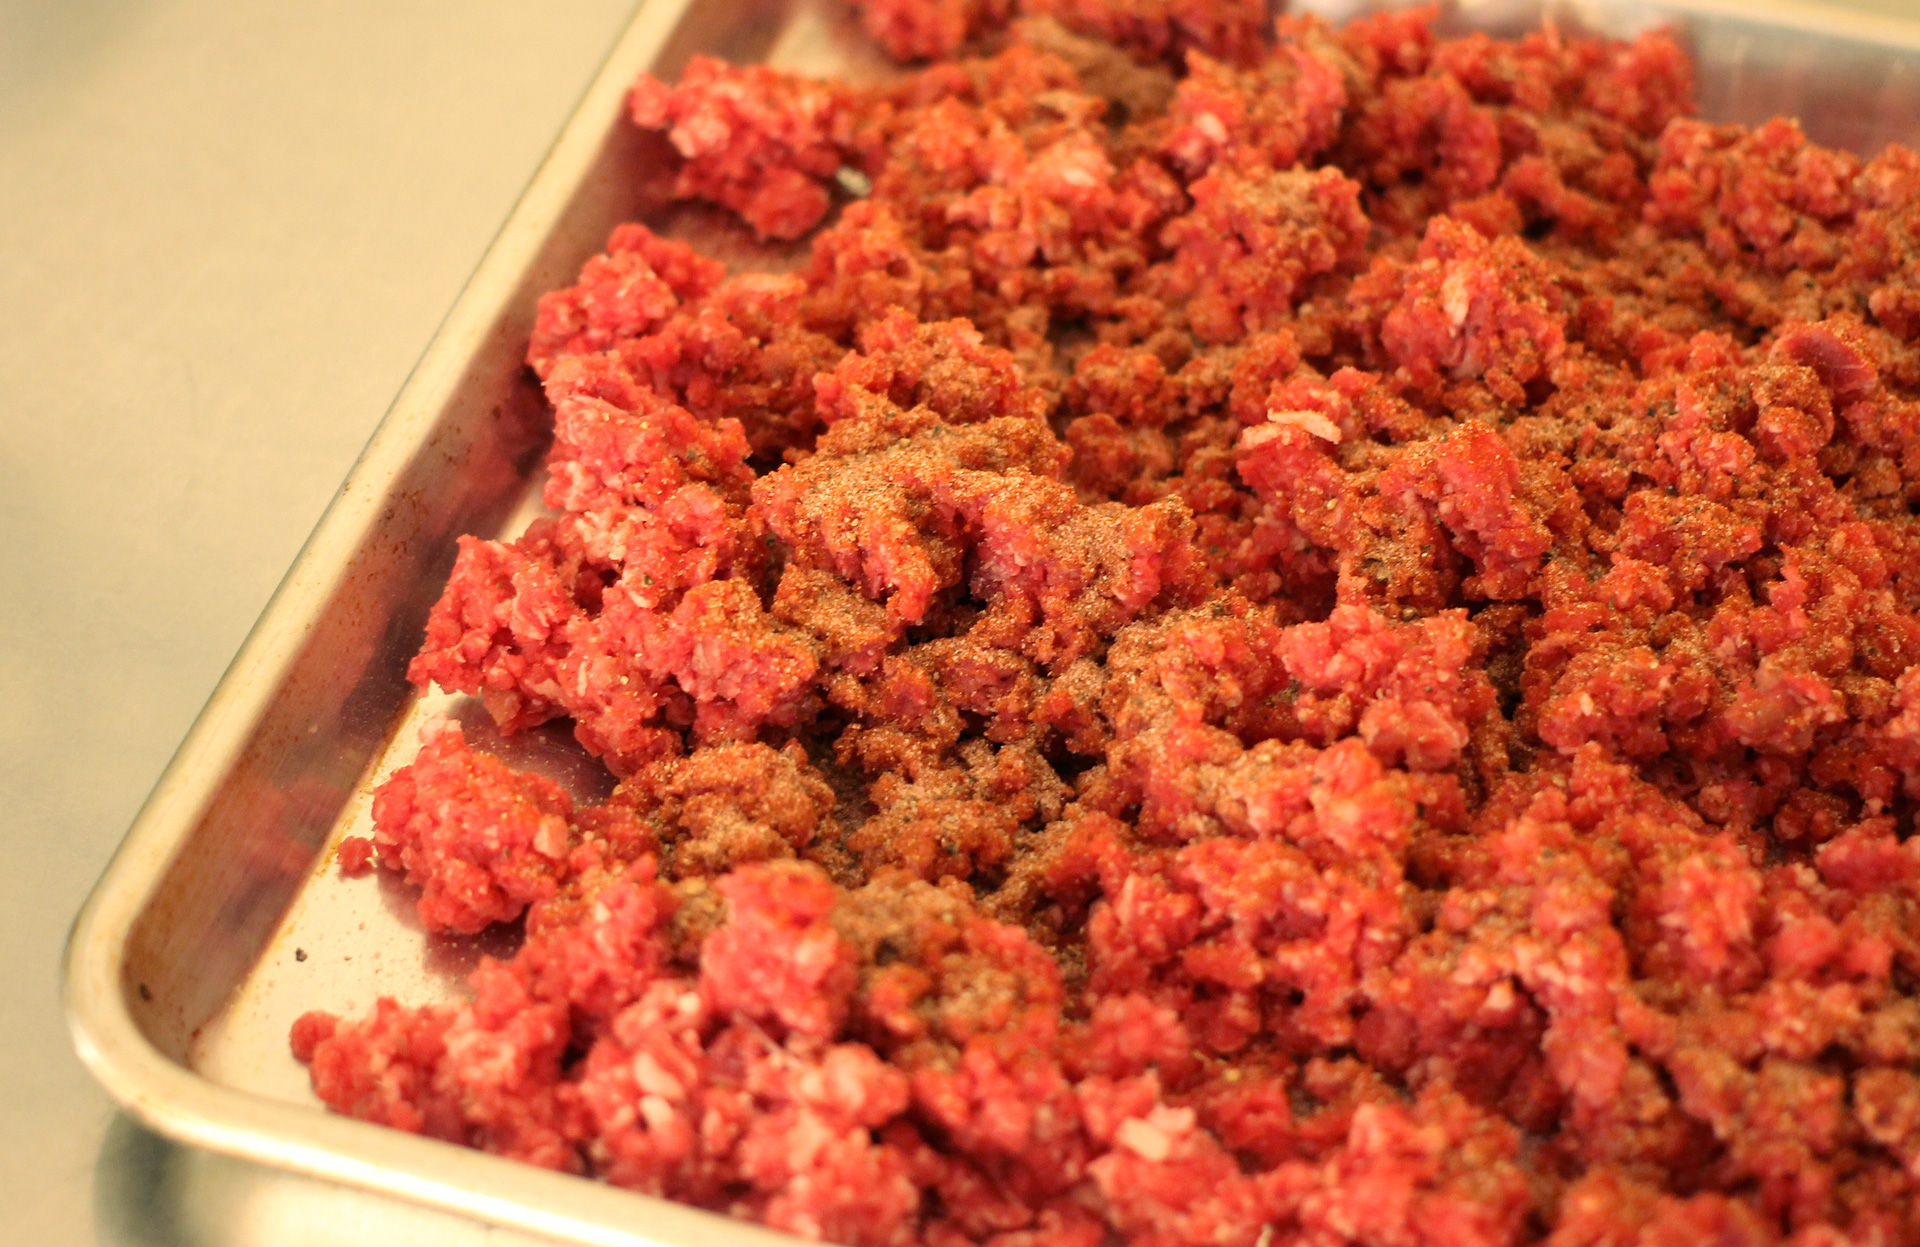 Ground beef with salt, paprika, pepper, garlic powder, and onion powder — no nitrates.